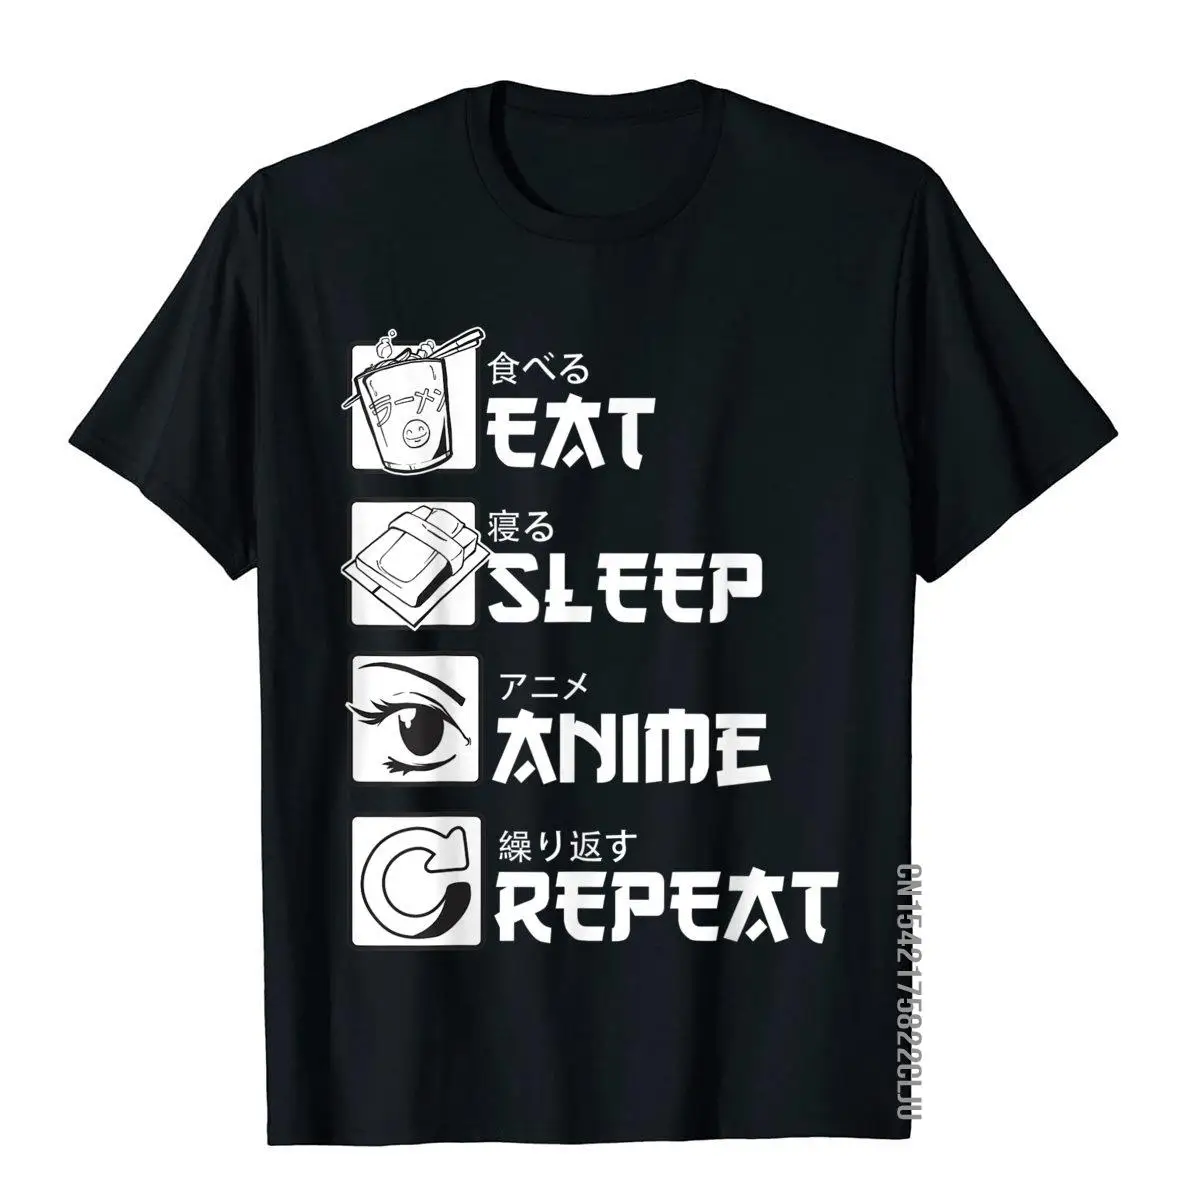 

Eat Sleep Anime Repeat Shirt Funny Japanese Manga Gift Tee T-Shirt Casual Tops Tees For Men Cotton T Shirts Printed Plain